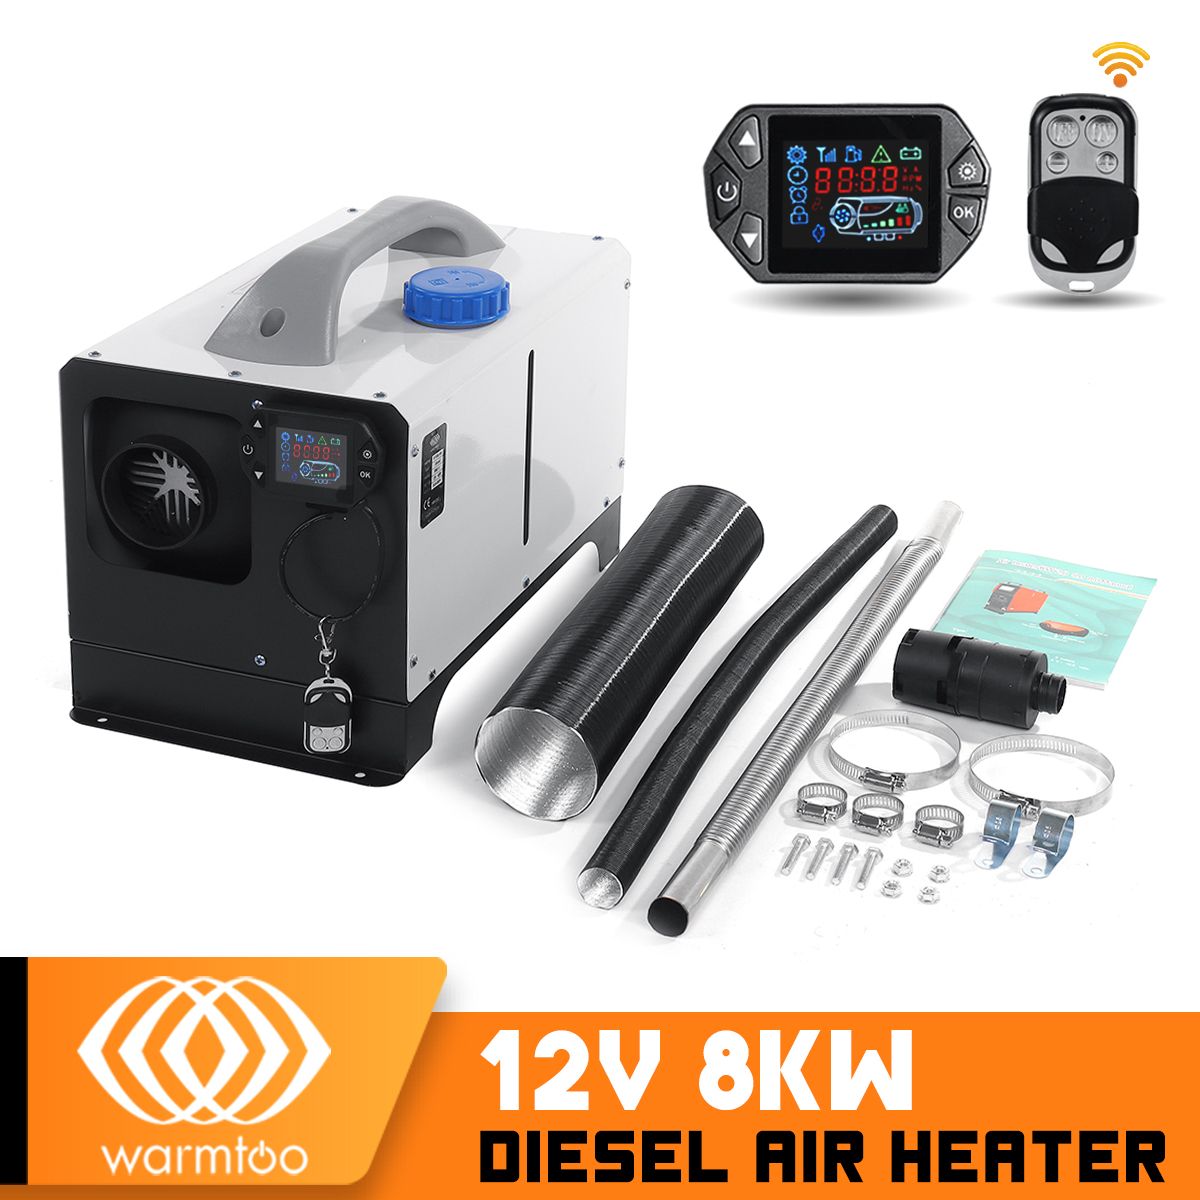 WARMTOOL-All-In-One-12V-8KW-Car-Diesel-Air-Heater-Parking-Warmer-Tool-1602181